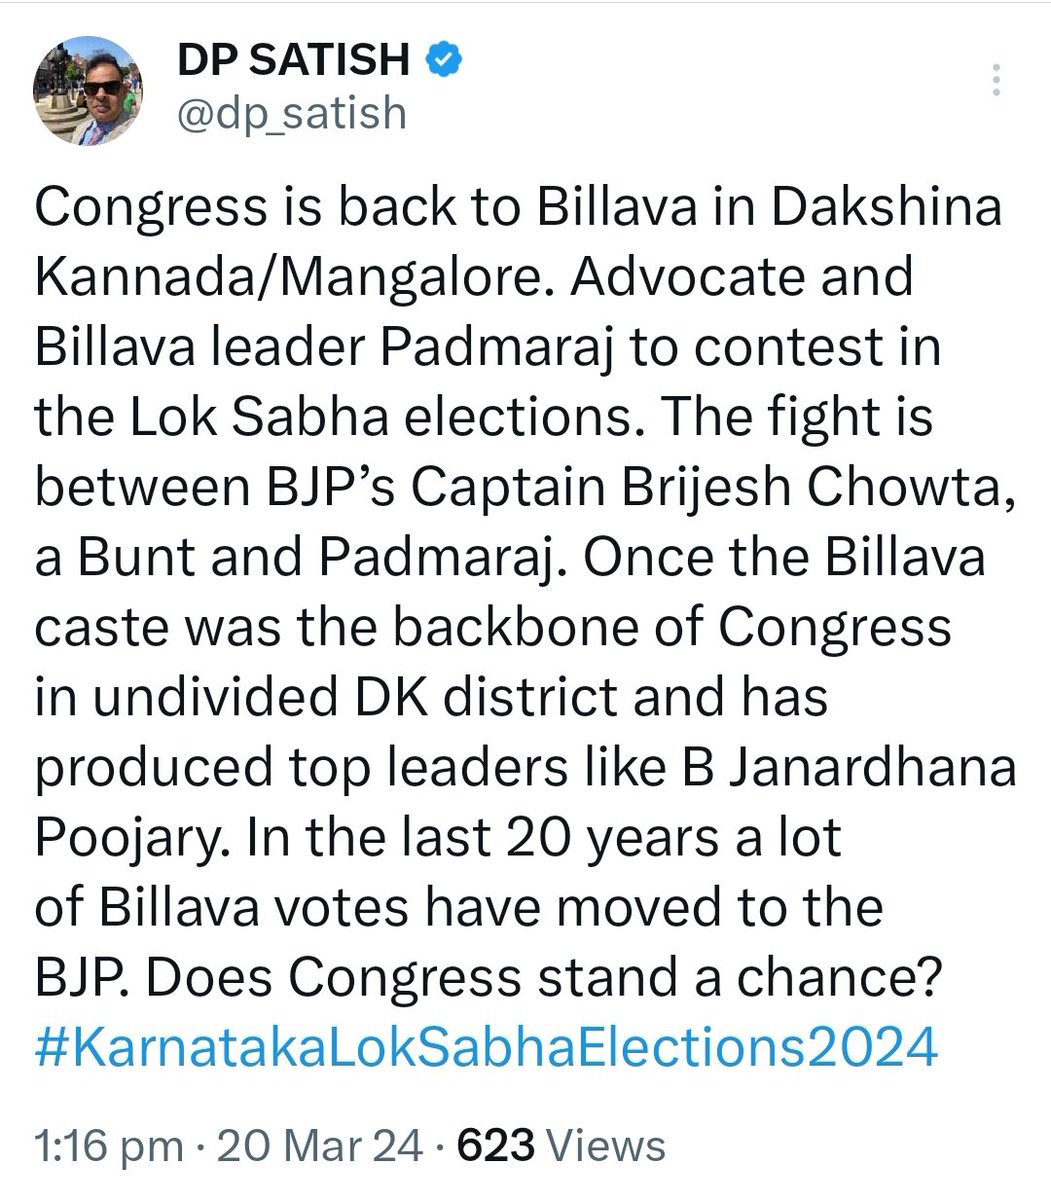 #Karnataka
#Misson #Dakshinakannada...✌️
Two things Congress has clear focus this time...
1. Win lingayat back.
2. Make in roads in Dakshina Kannada.